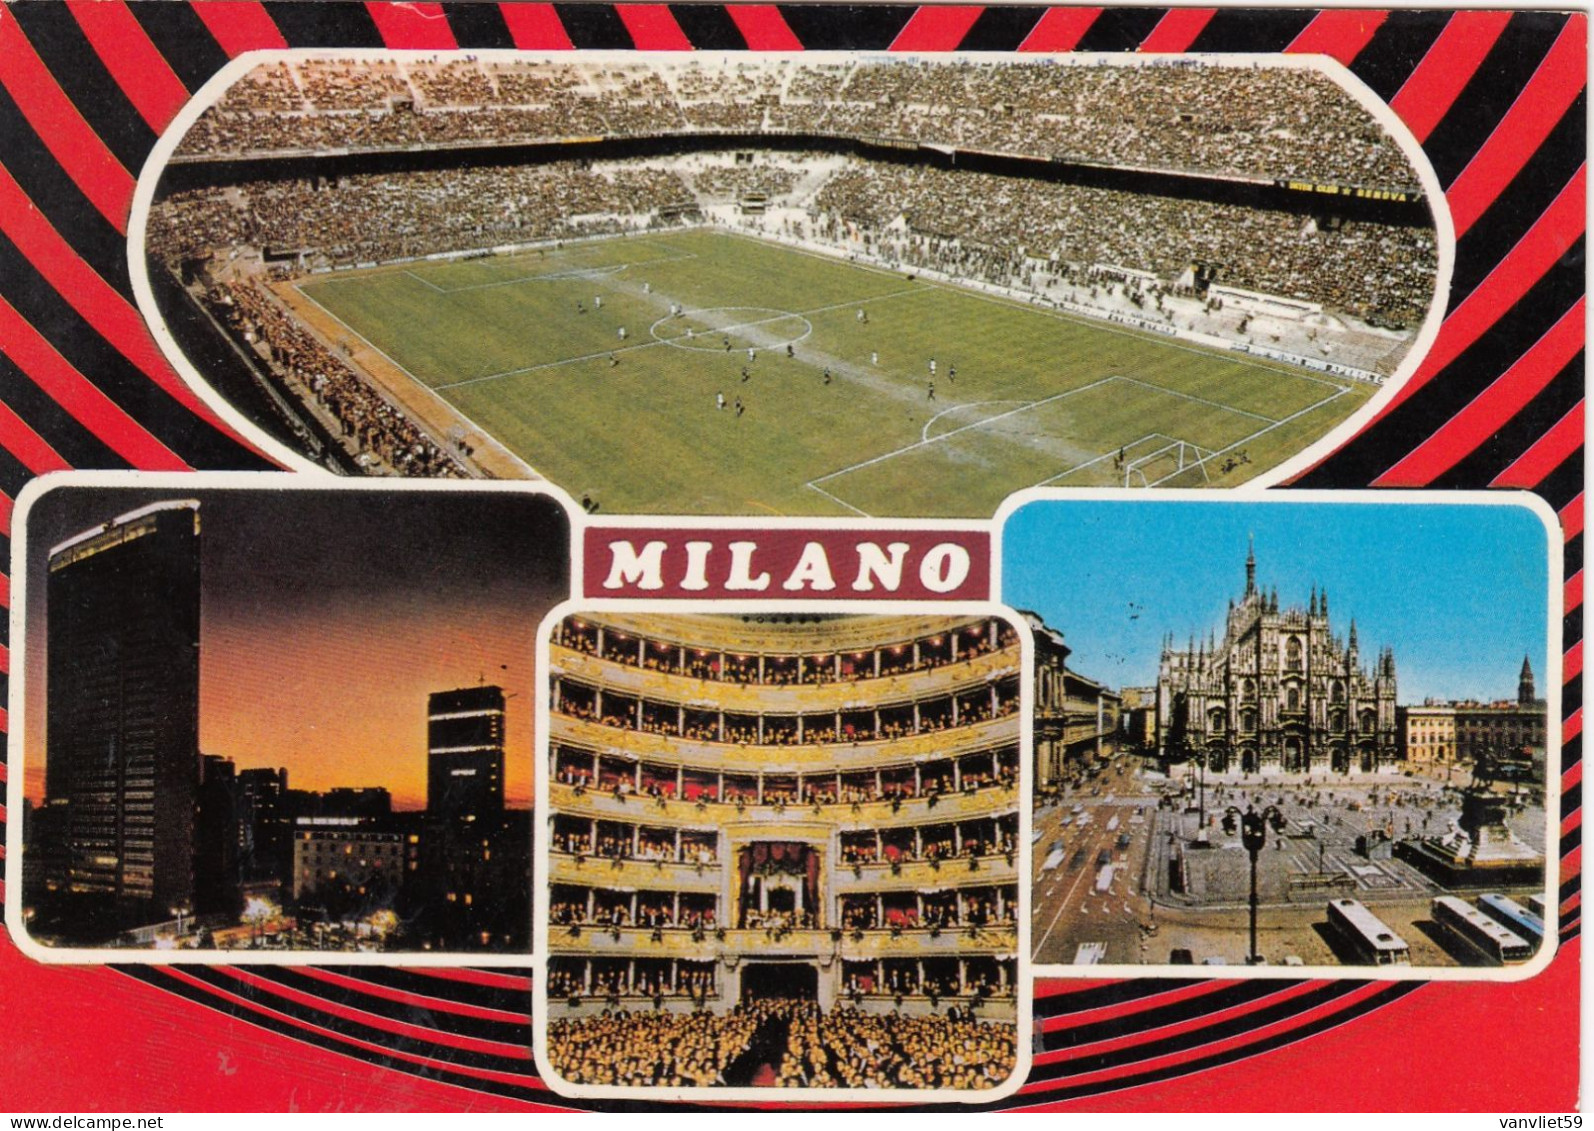 STADIO-STADE-STADIUM-ESTADIO-CAMPO SPORTIVO-SOCCER-FOOTBALL- 3 CARTOLINE MILANO-TORINO- VERA FOTO-2 VIAGGIATE 1968-1996 - Fussball